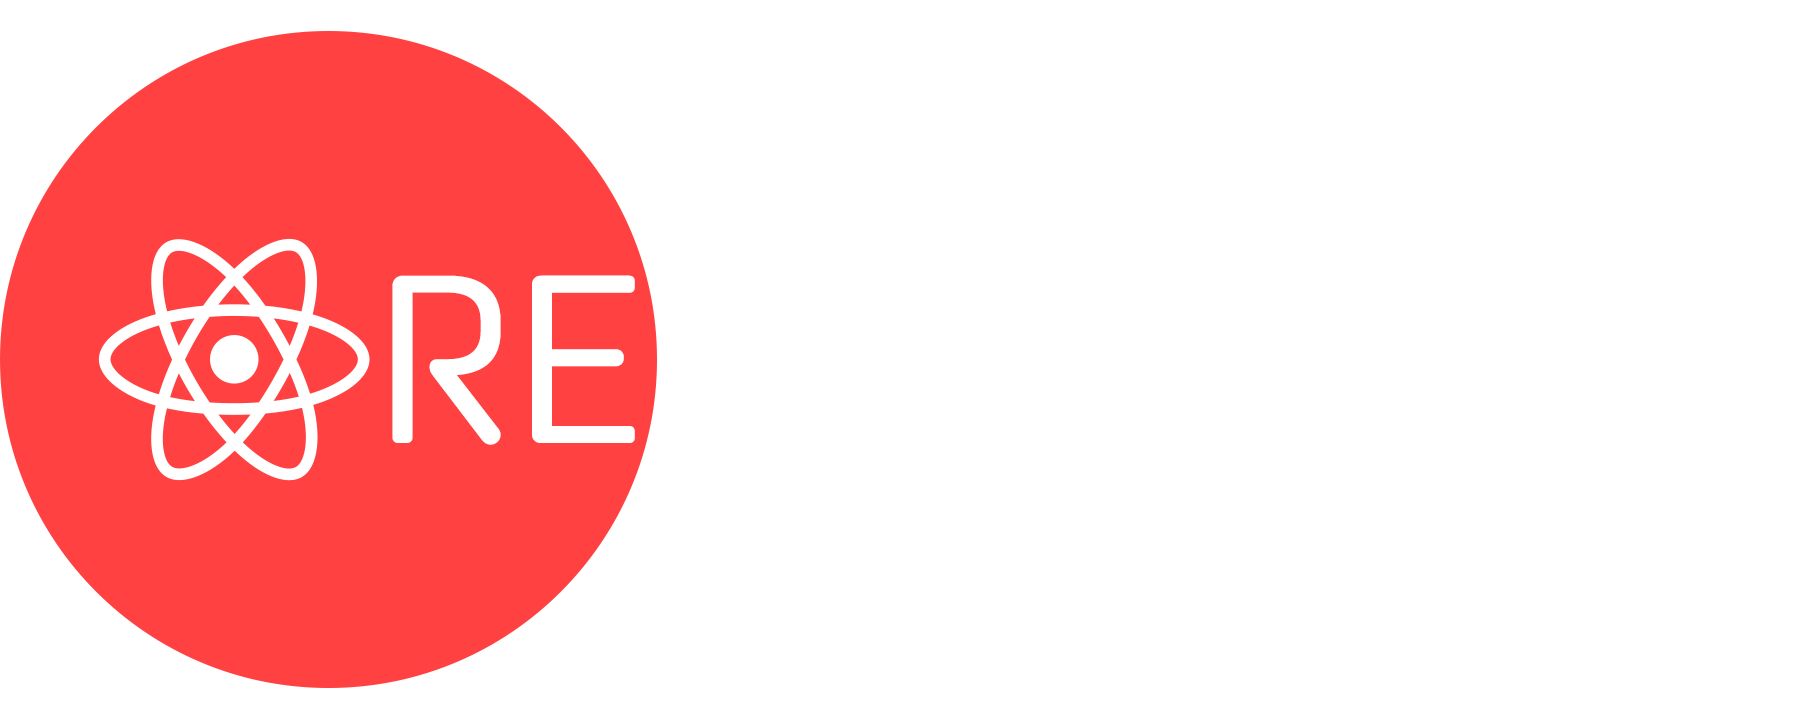 React Japan